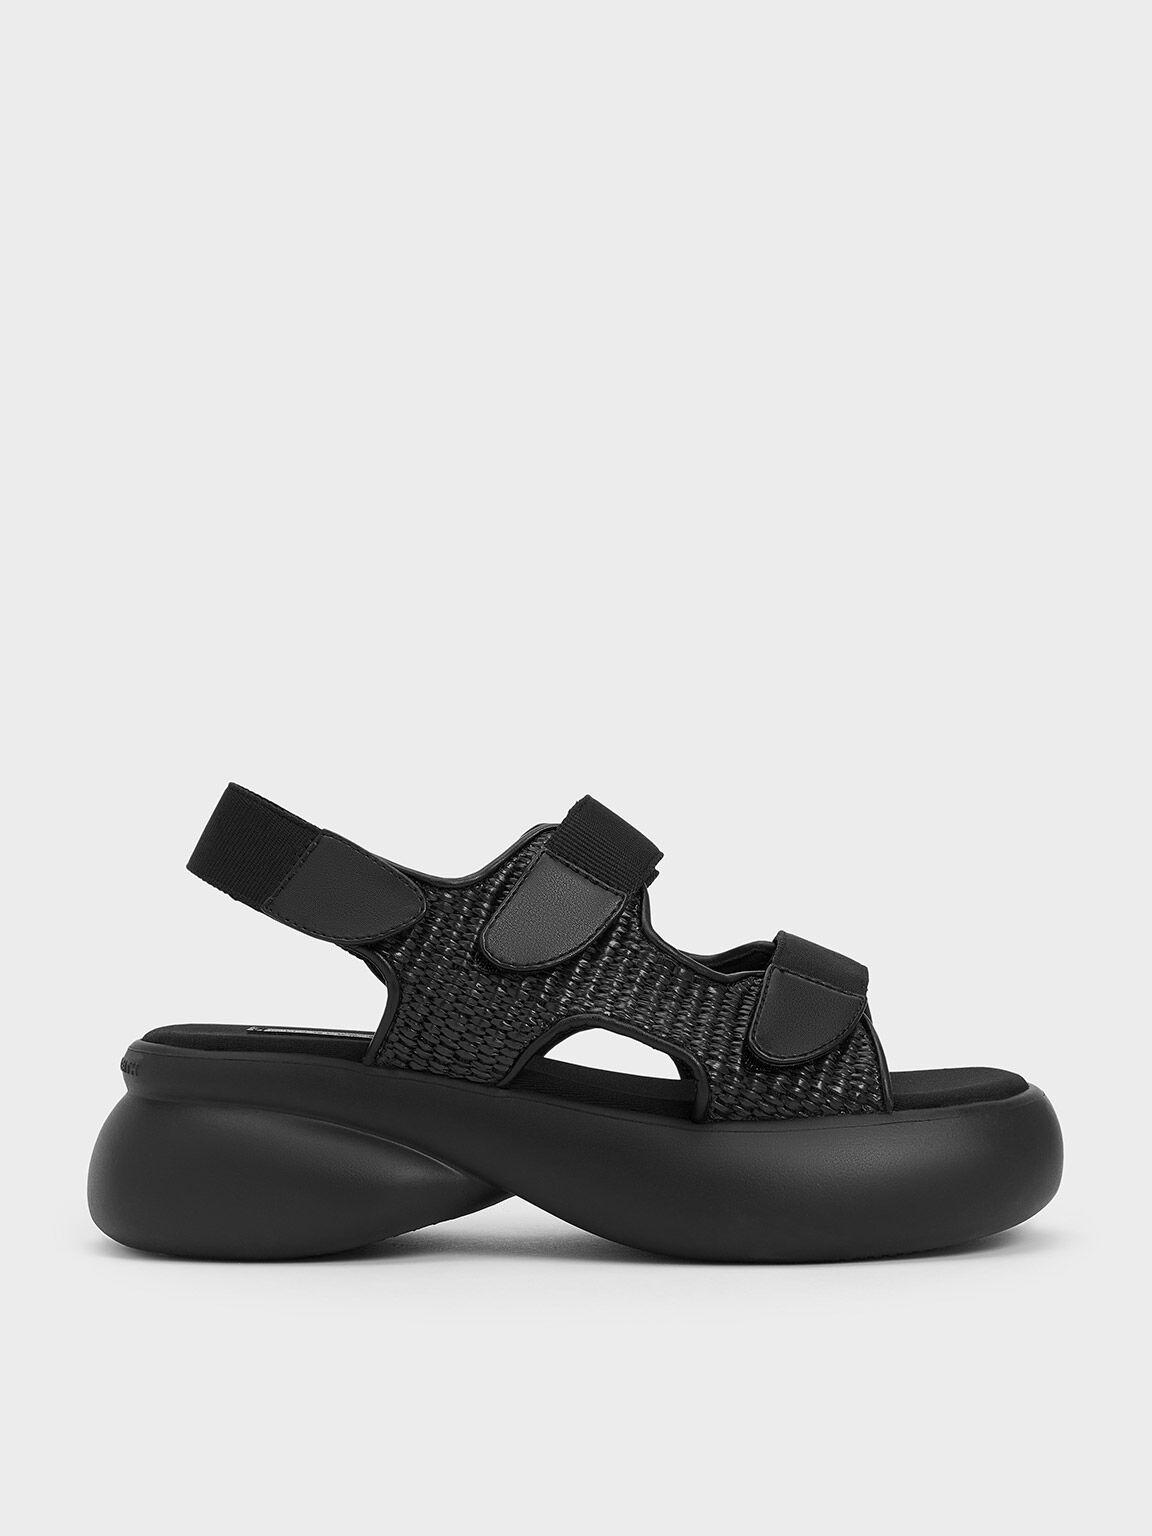 Sandal Sports Double-Strap Woven, Black Textured, hi-res